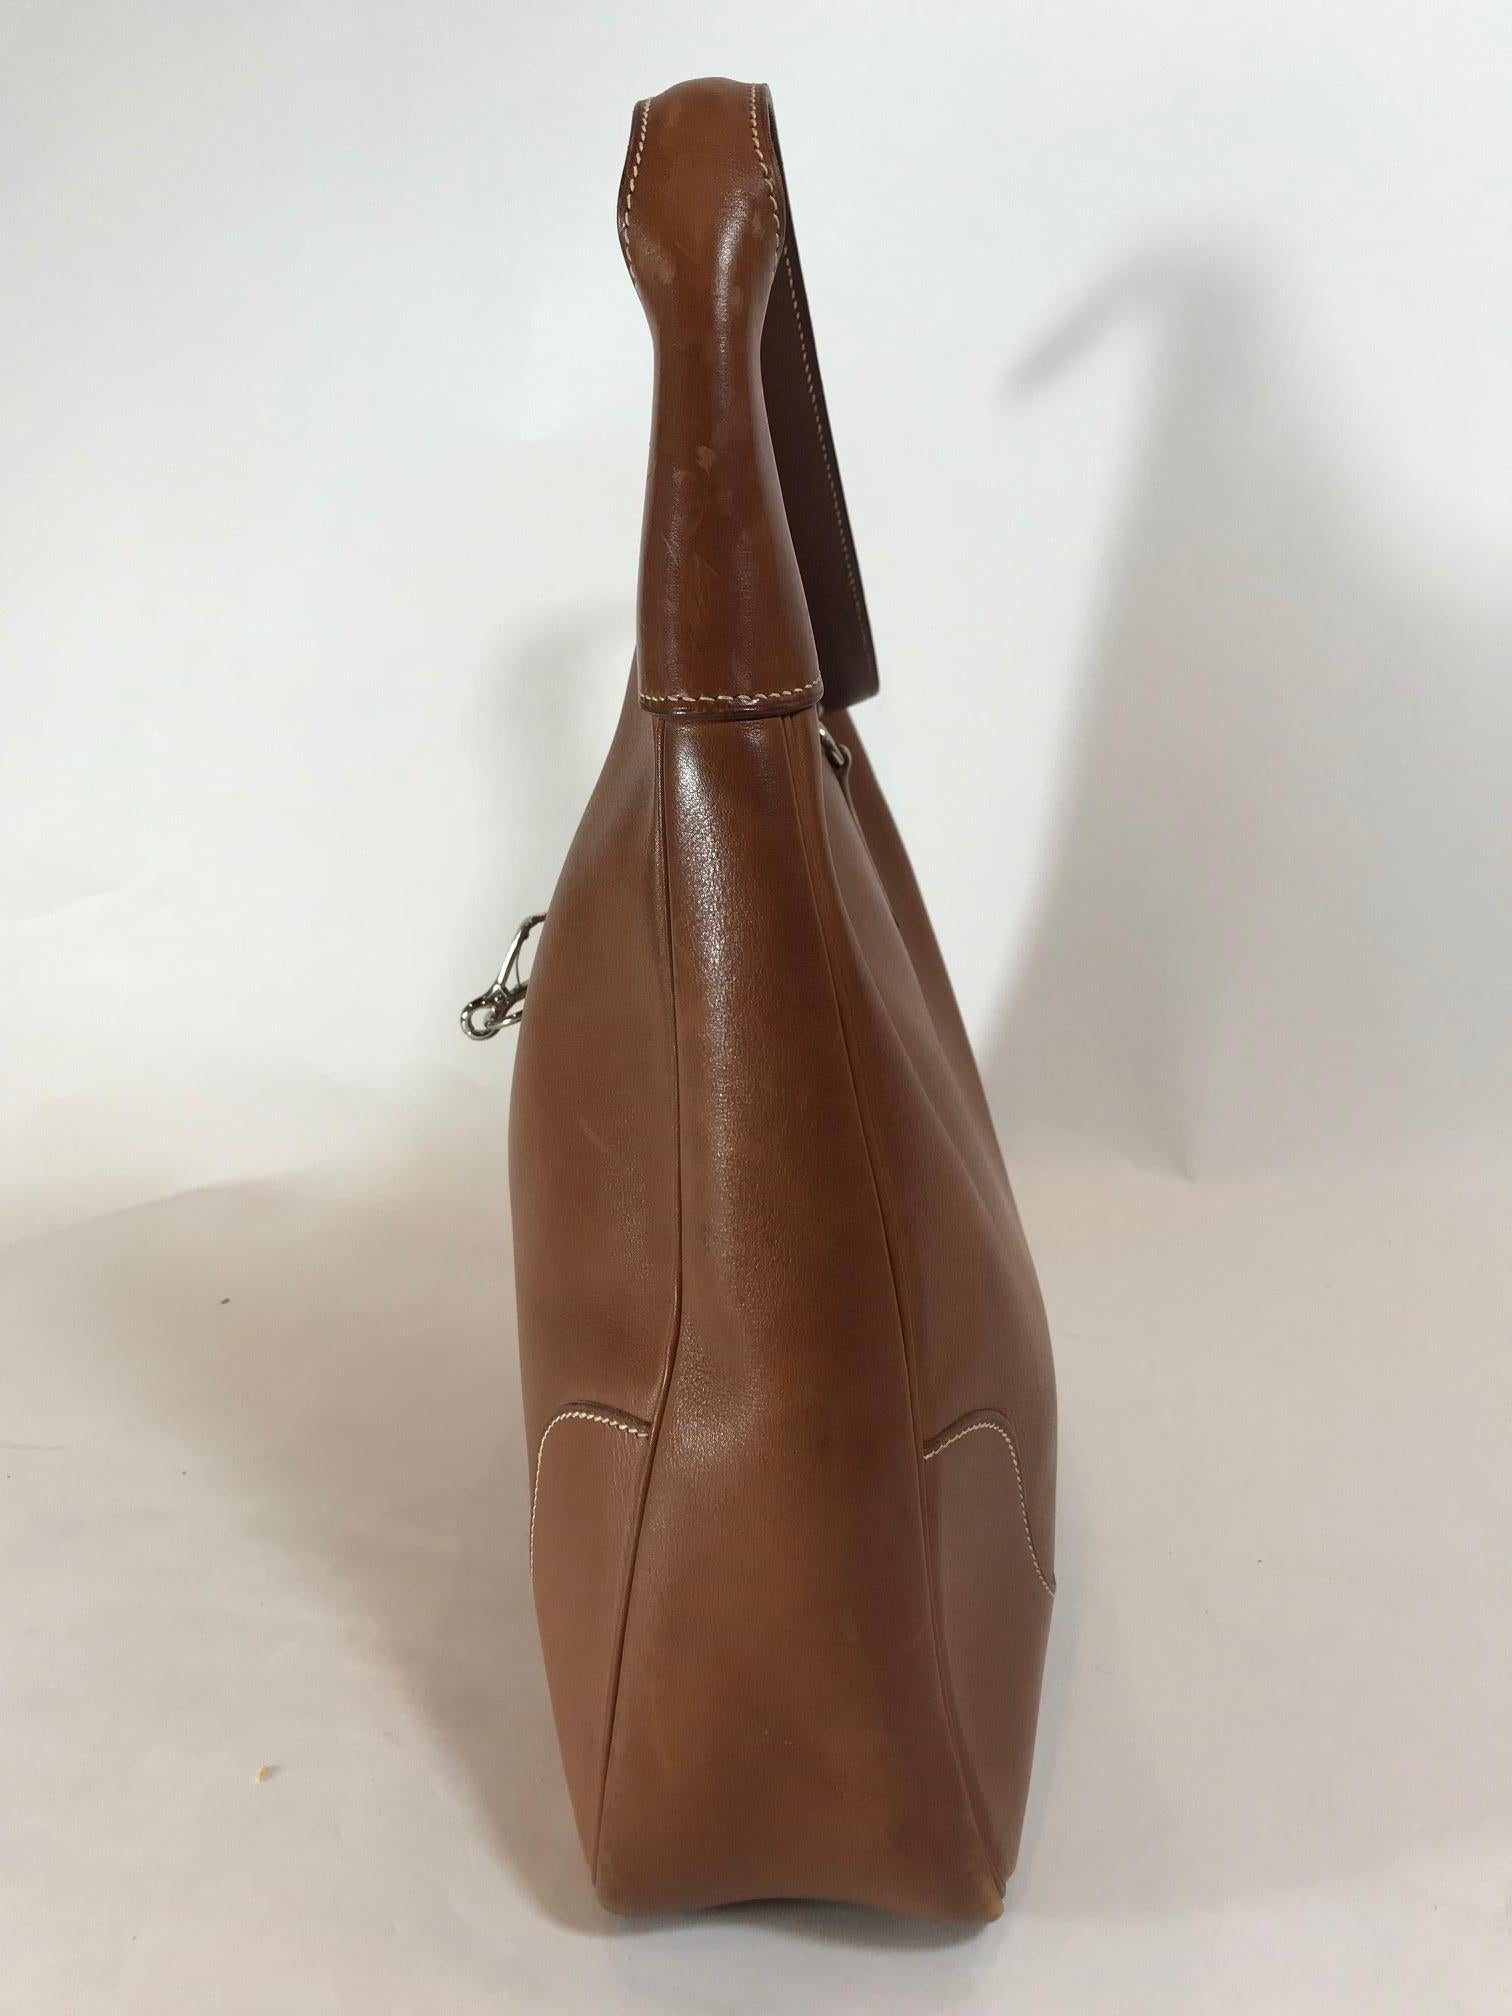 Hermès Vintage Trim II Handbag In Excellent Condition For Sale In Roslyn, NY